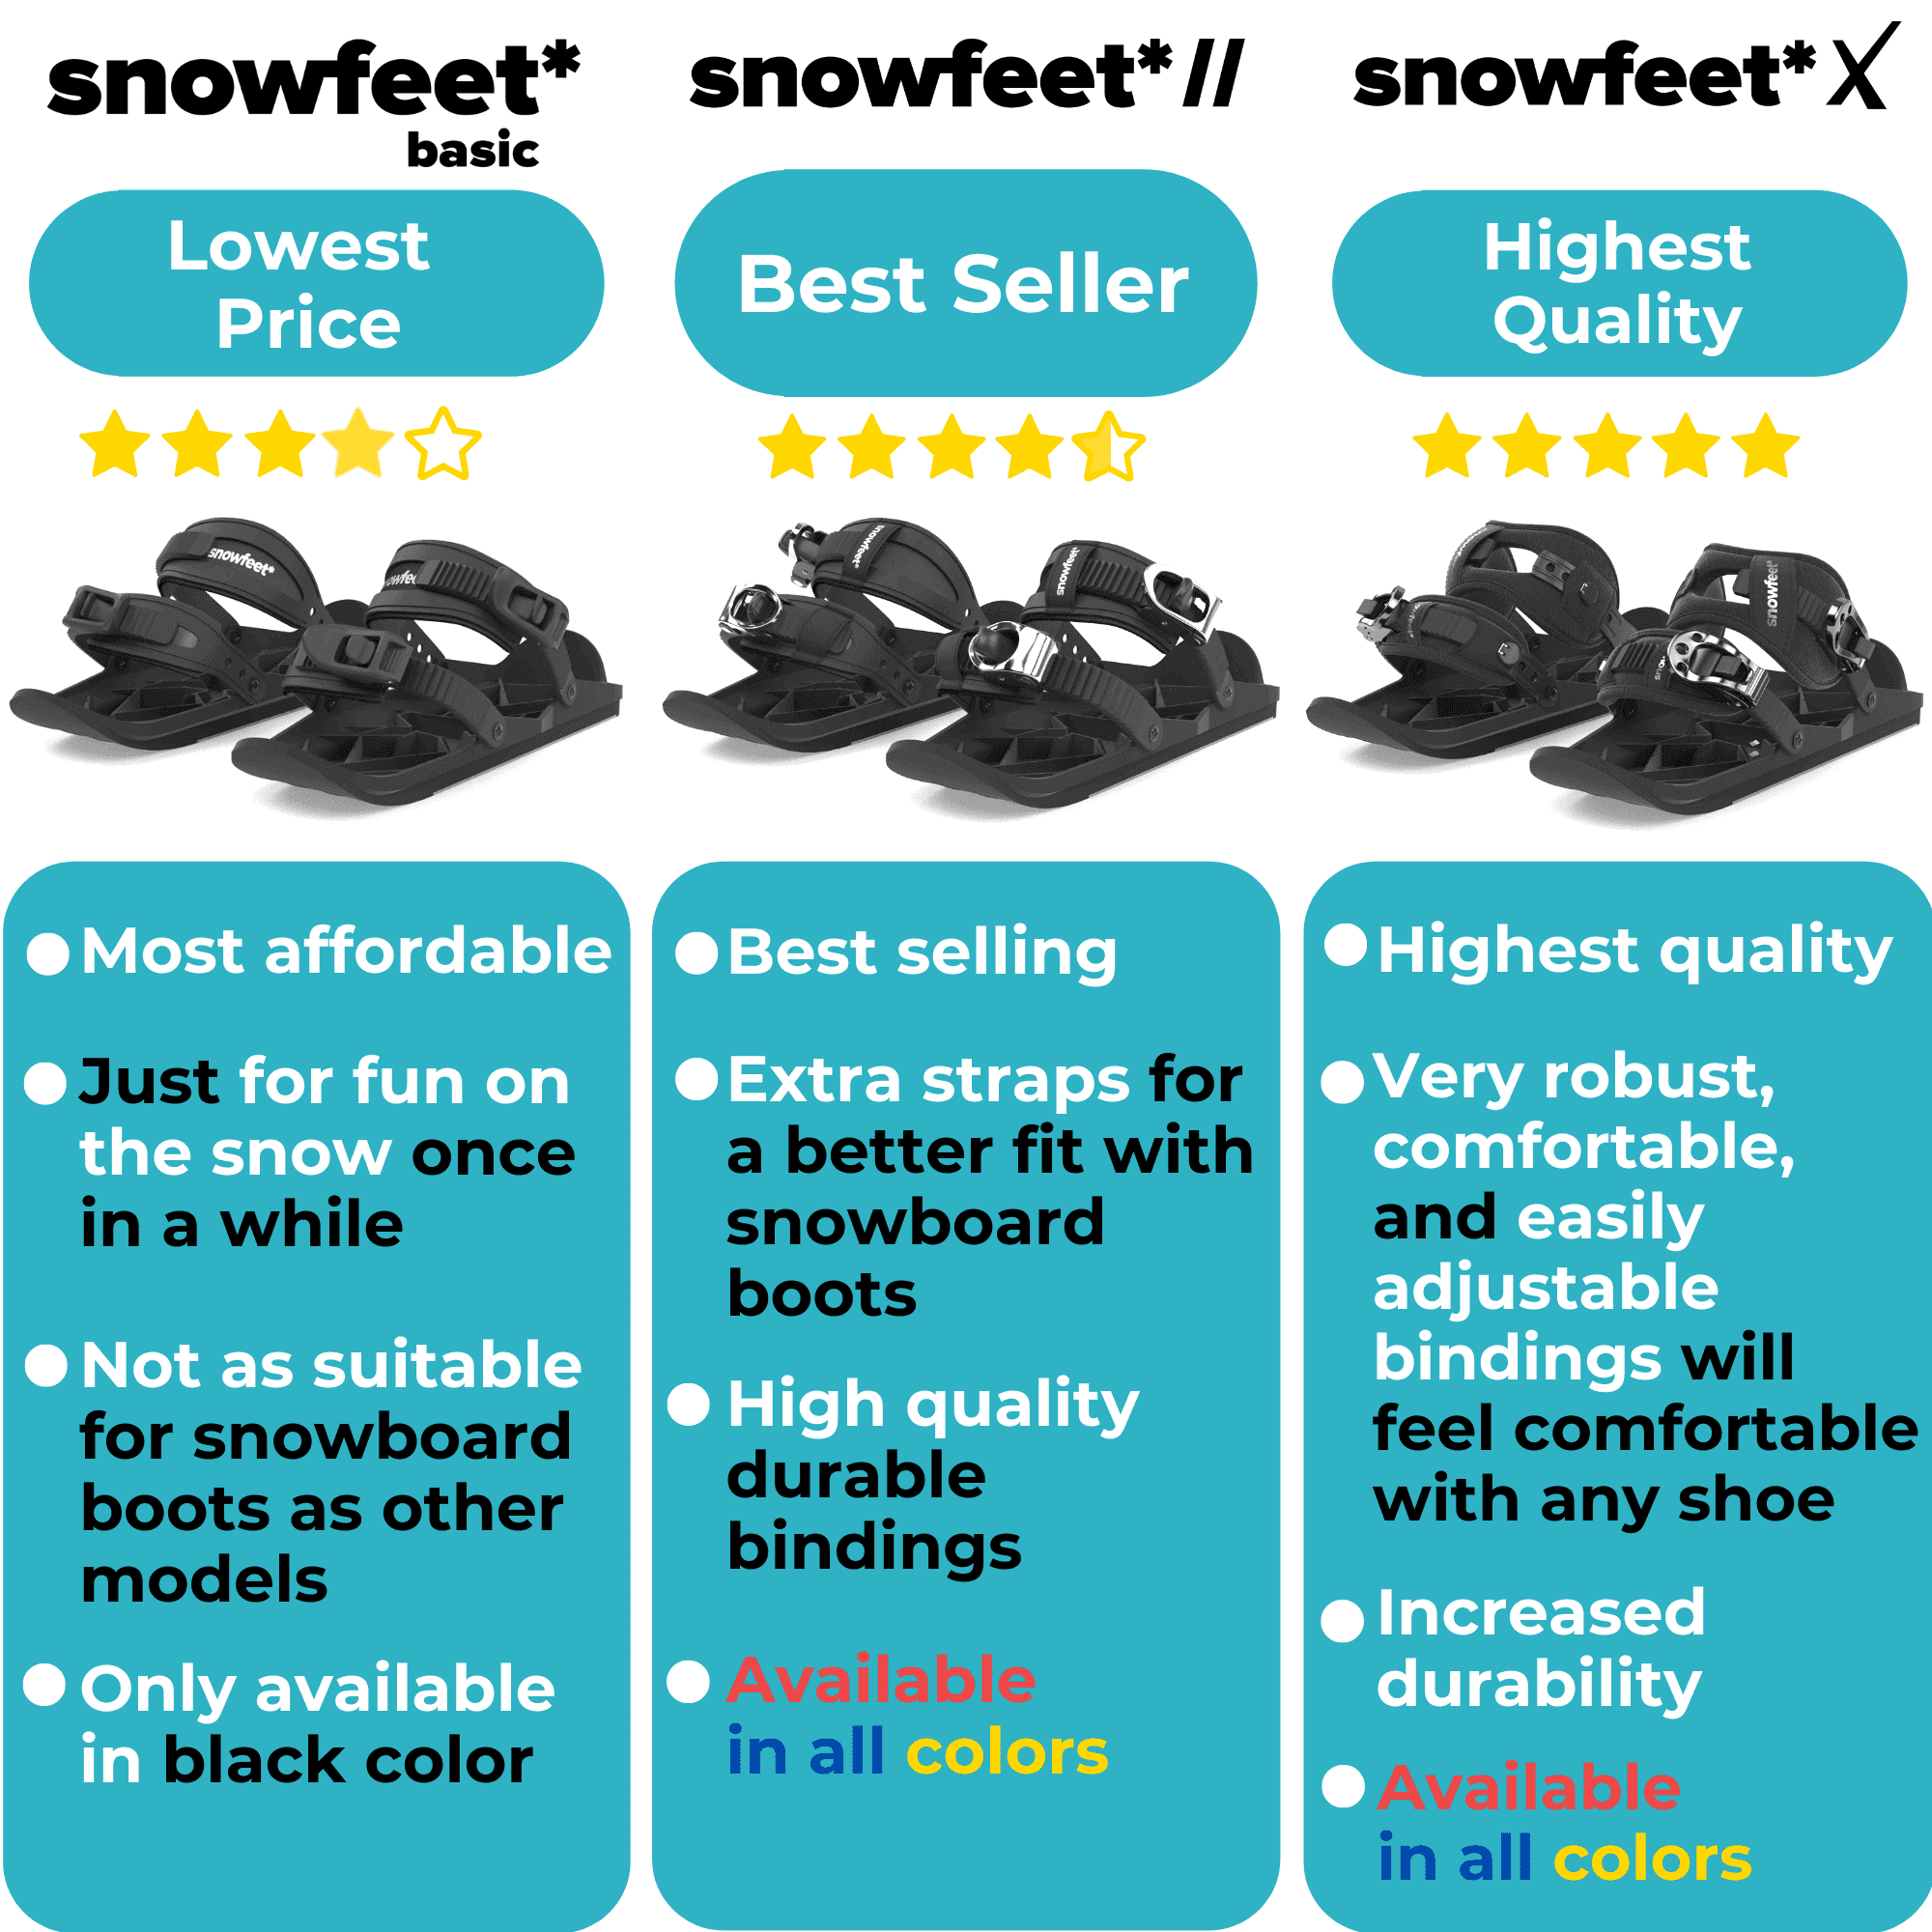 Snowfeet* Mini Skis | Free Shipping Sale